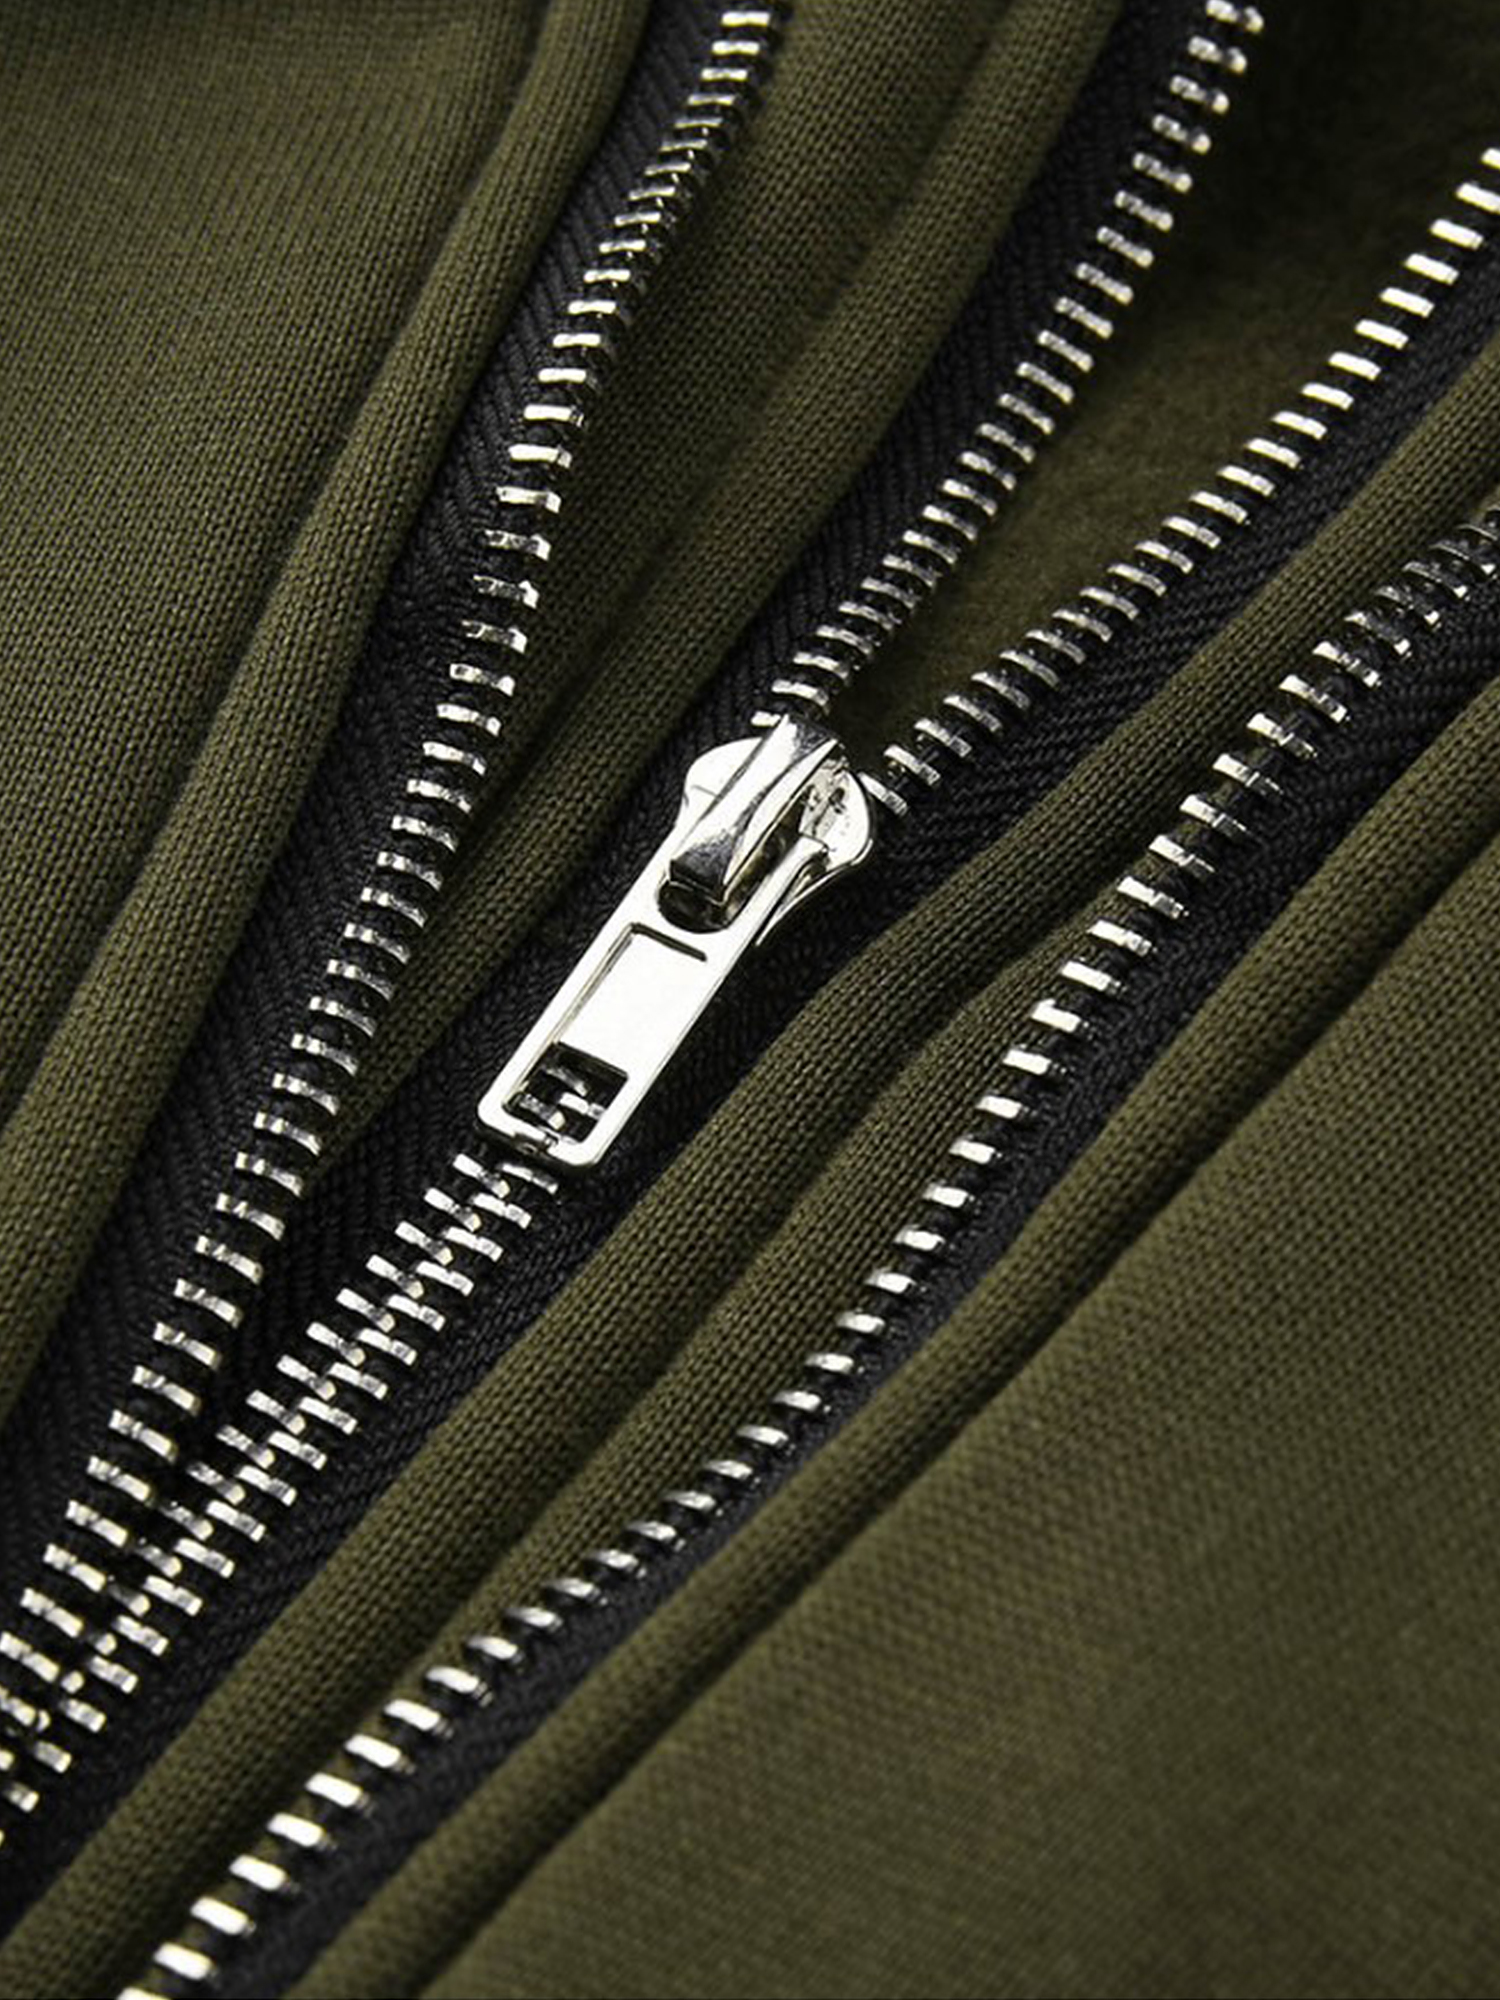 Ladies Plus Size Zipper Hoodies Mid-Length Loose Coat Casual Pocket Jackets Women Autumn Baggy Warm Overcoat Office Working Lounge Wear Women Plus Parkas Coats Anoraks - image 4 of 4